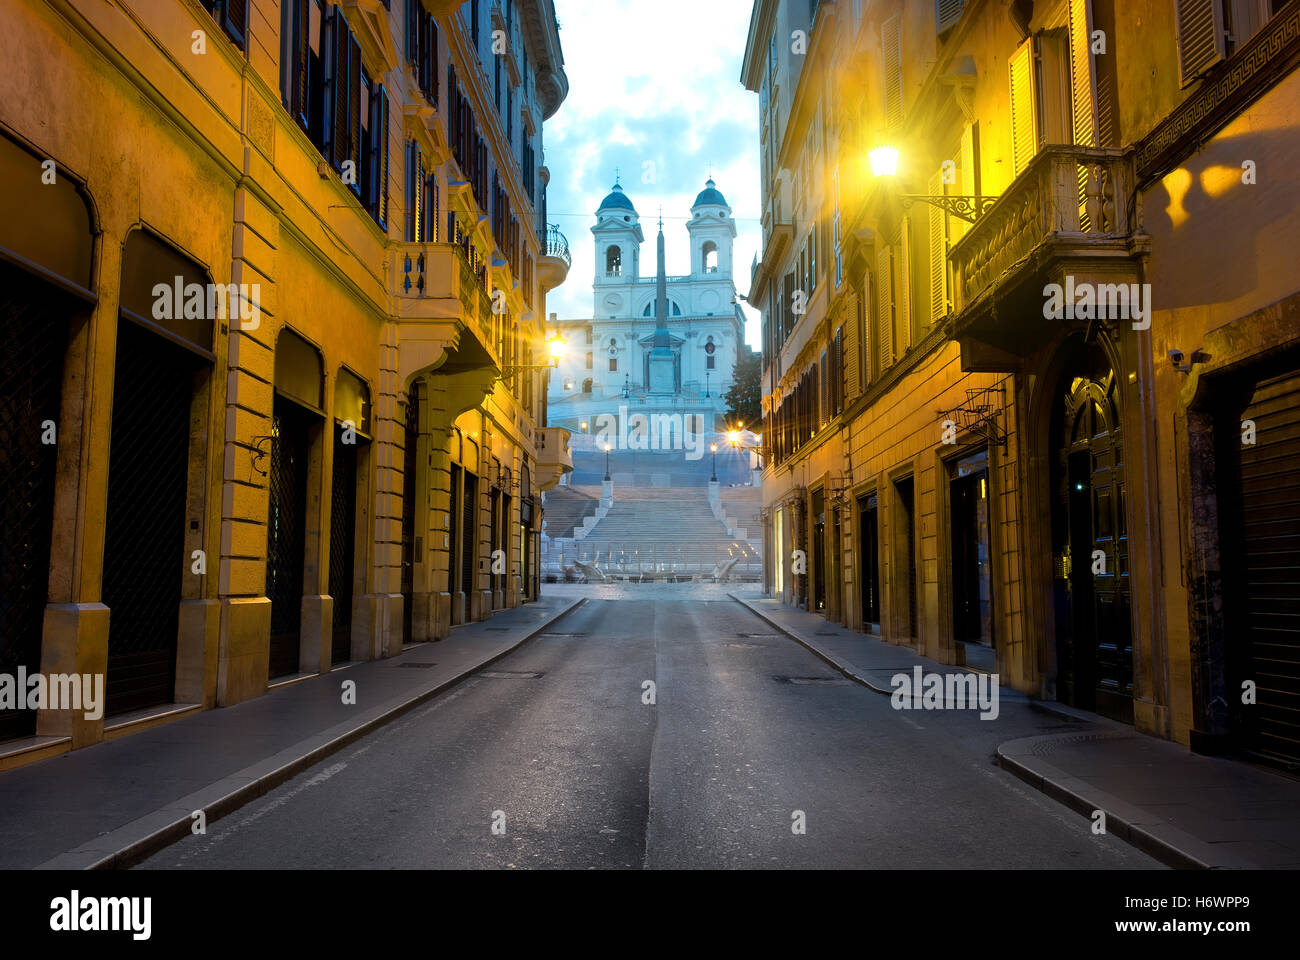 Famosas Escaleras Españolas y calle romana en la mañana, Italia Foto de stock